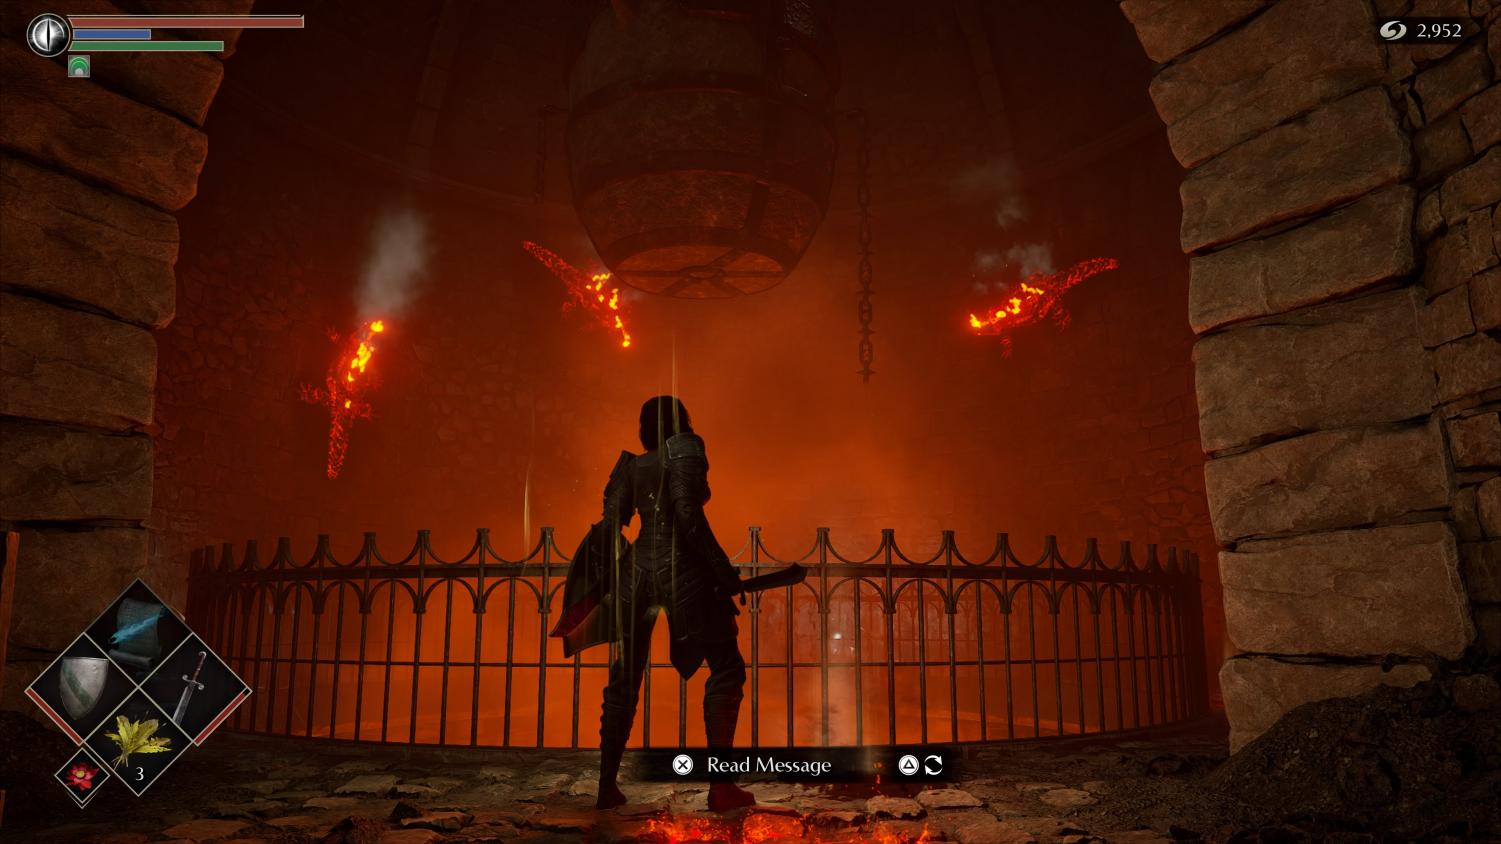 Demon's Souls Review (PS5)